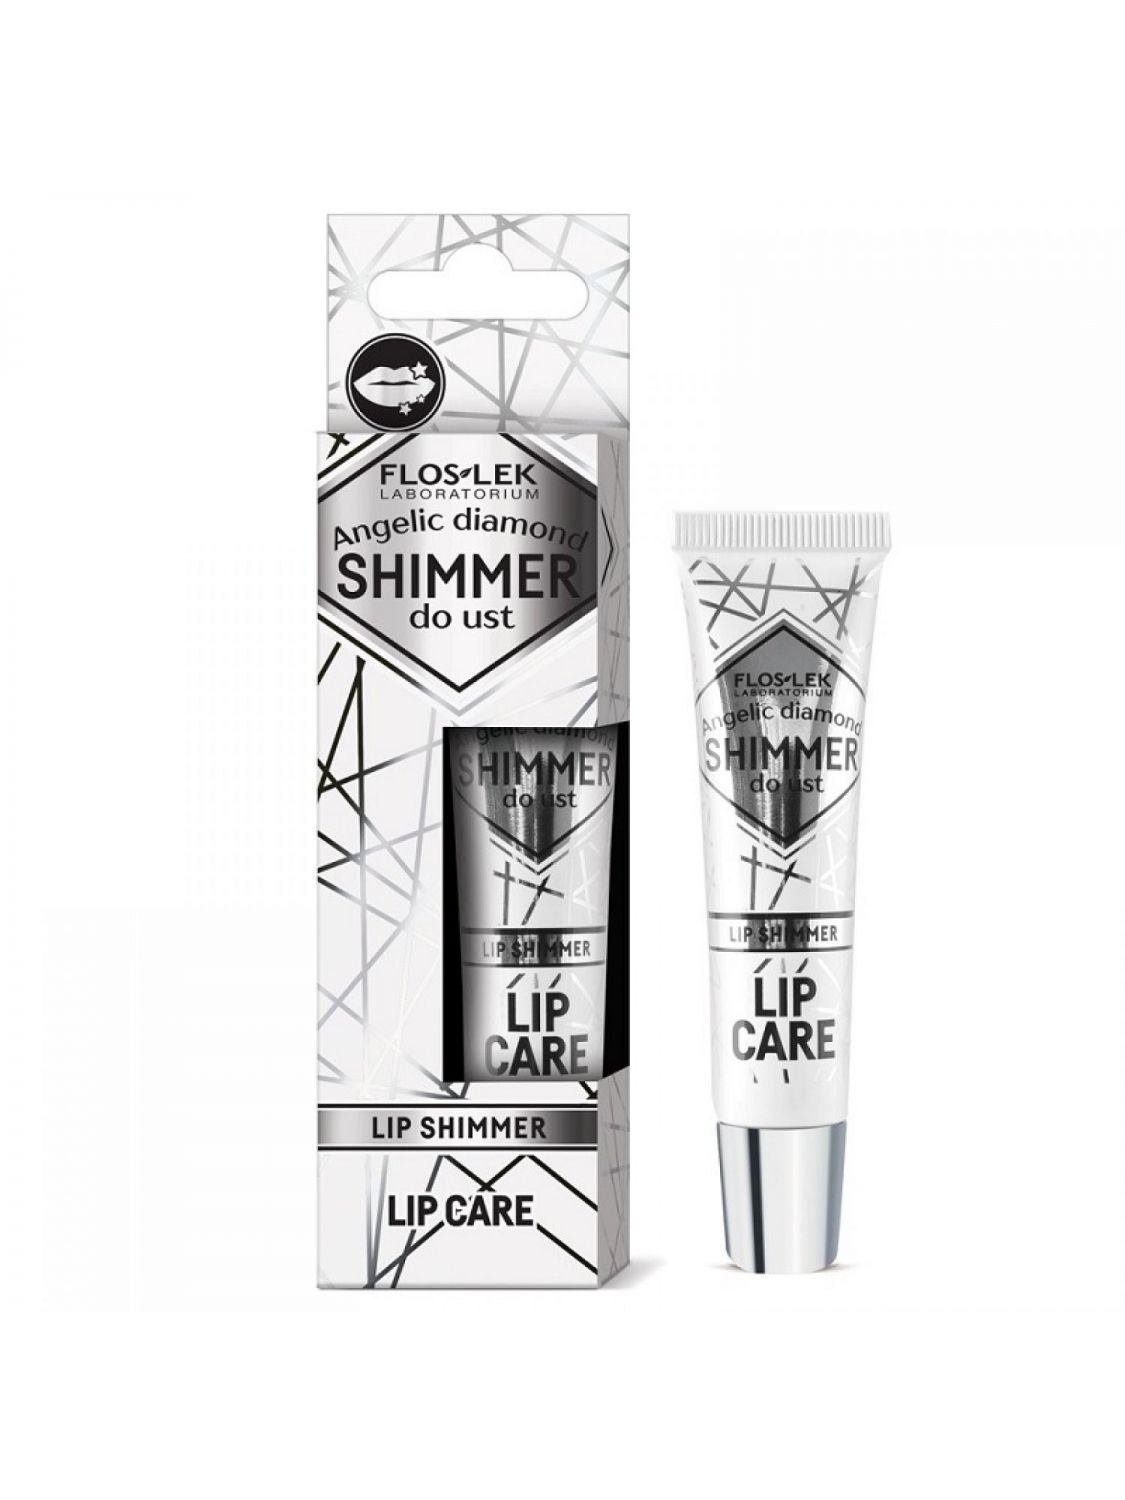 Angelic Diamond Lip Shimmer Moisturizing Lip Gloss in Metallic Color Floslek Lip Care moisturizer